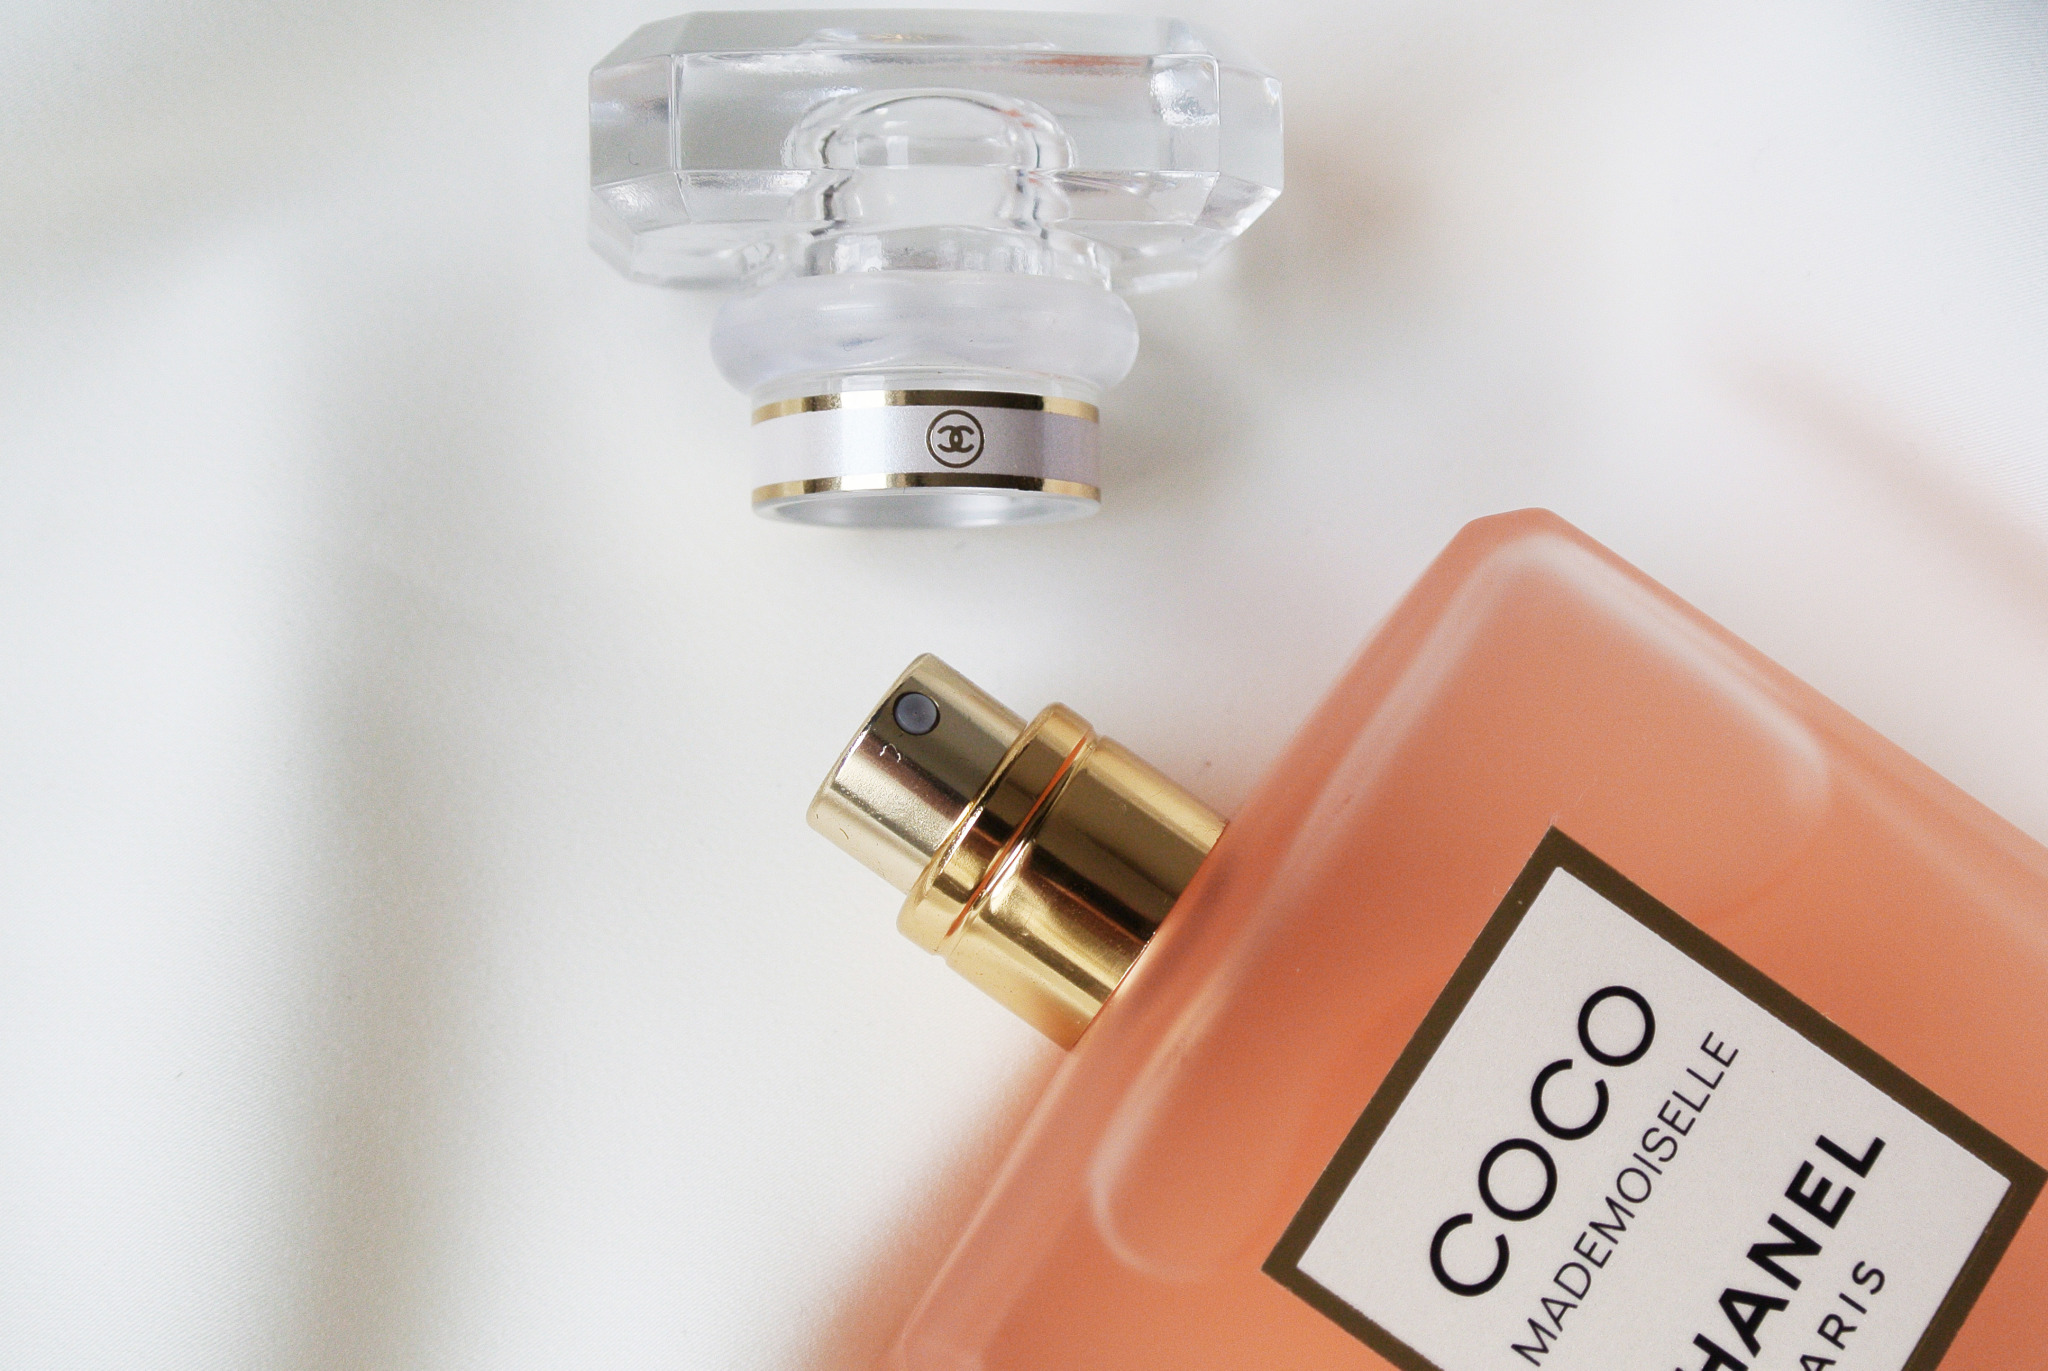 Chanel presents new Coco Mademoiselle L'eau Privée campaign